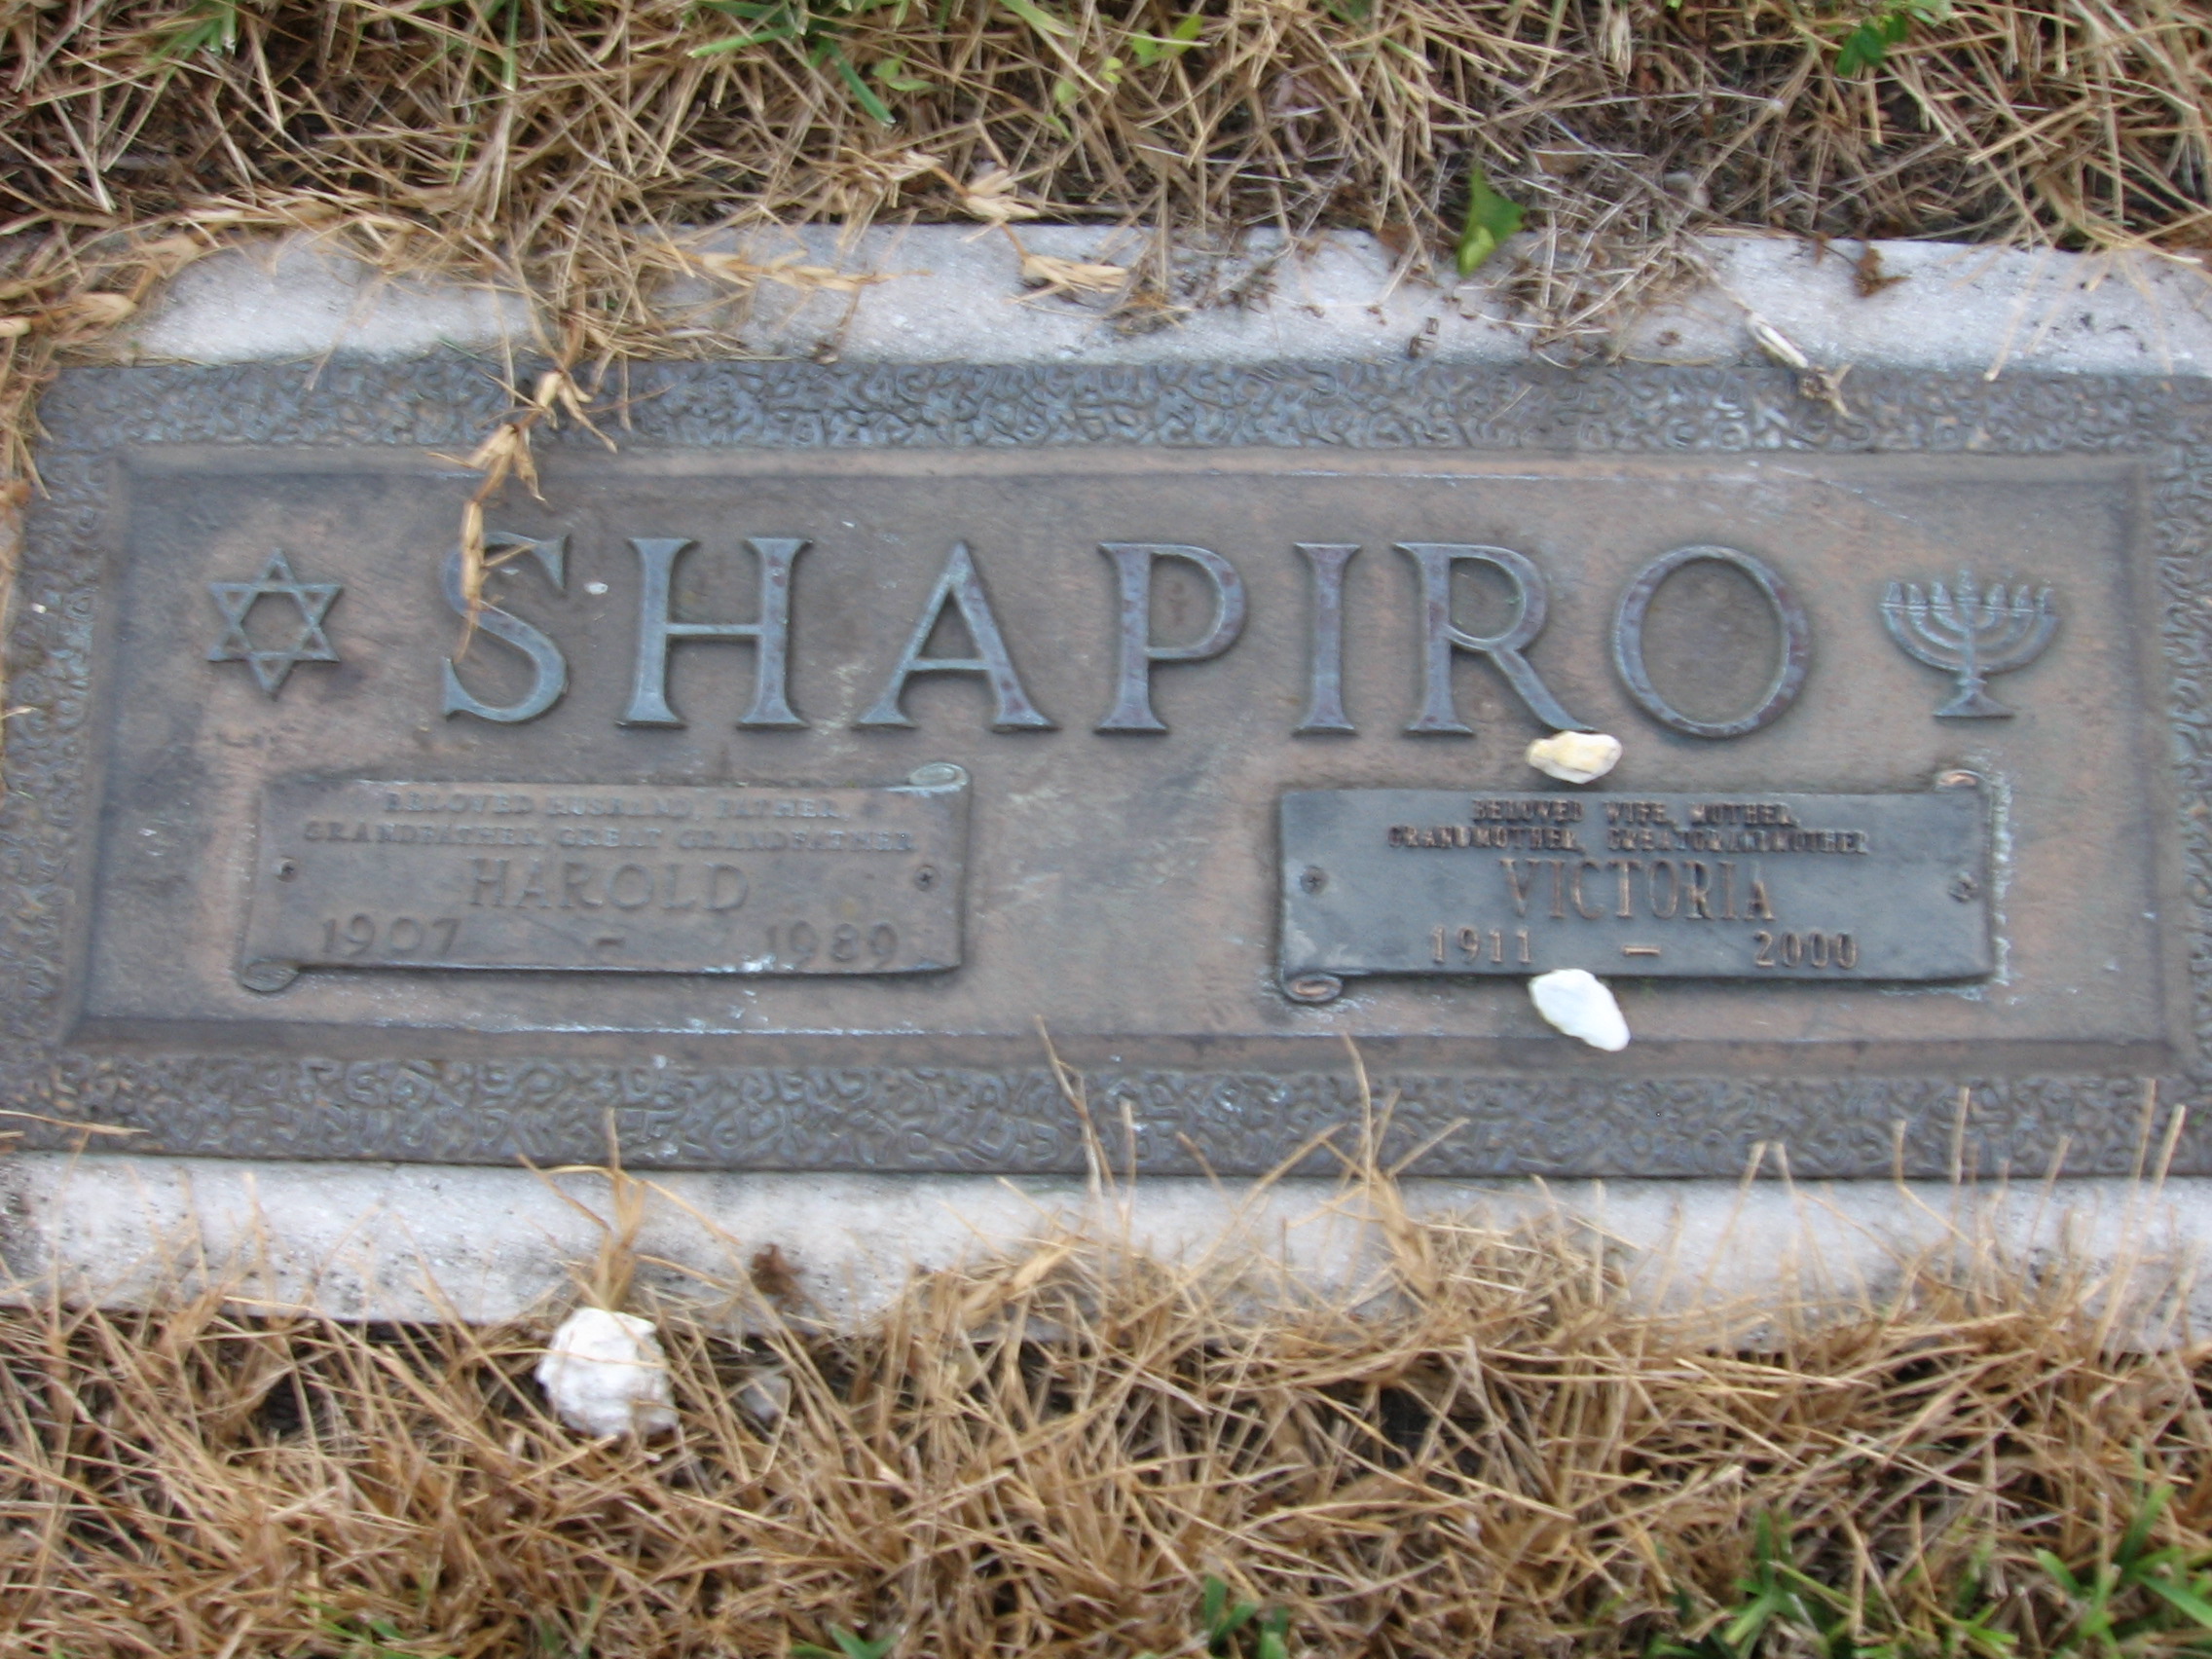 Harold Shapiro